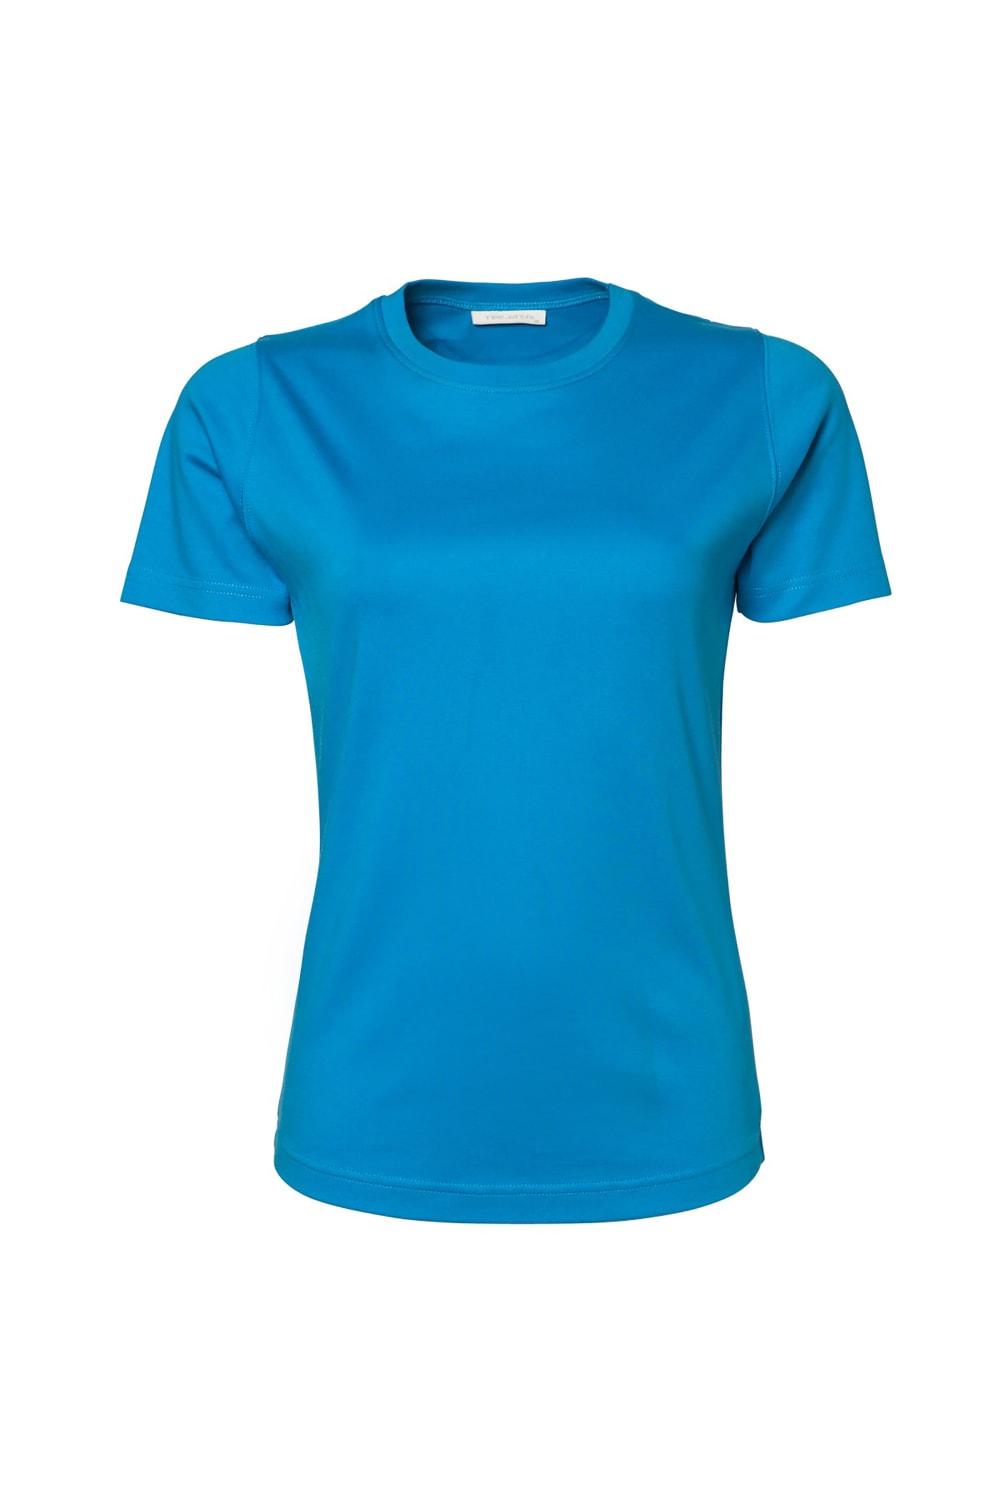 Tee Jays Womens/Ladies Interlock Short Sleeve T-Shirt (Azure Blue)